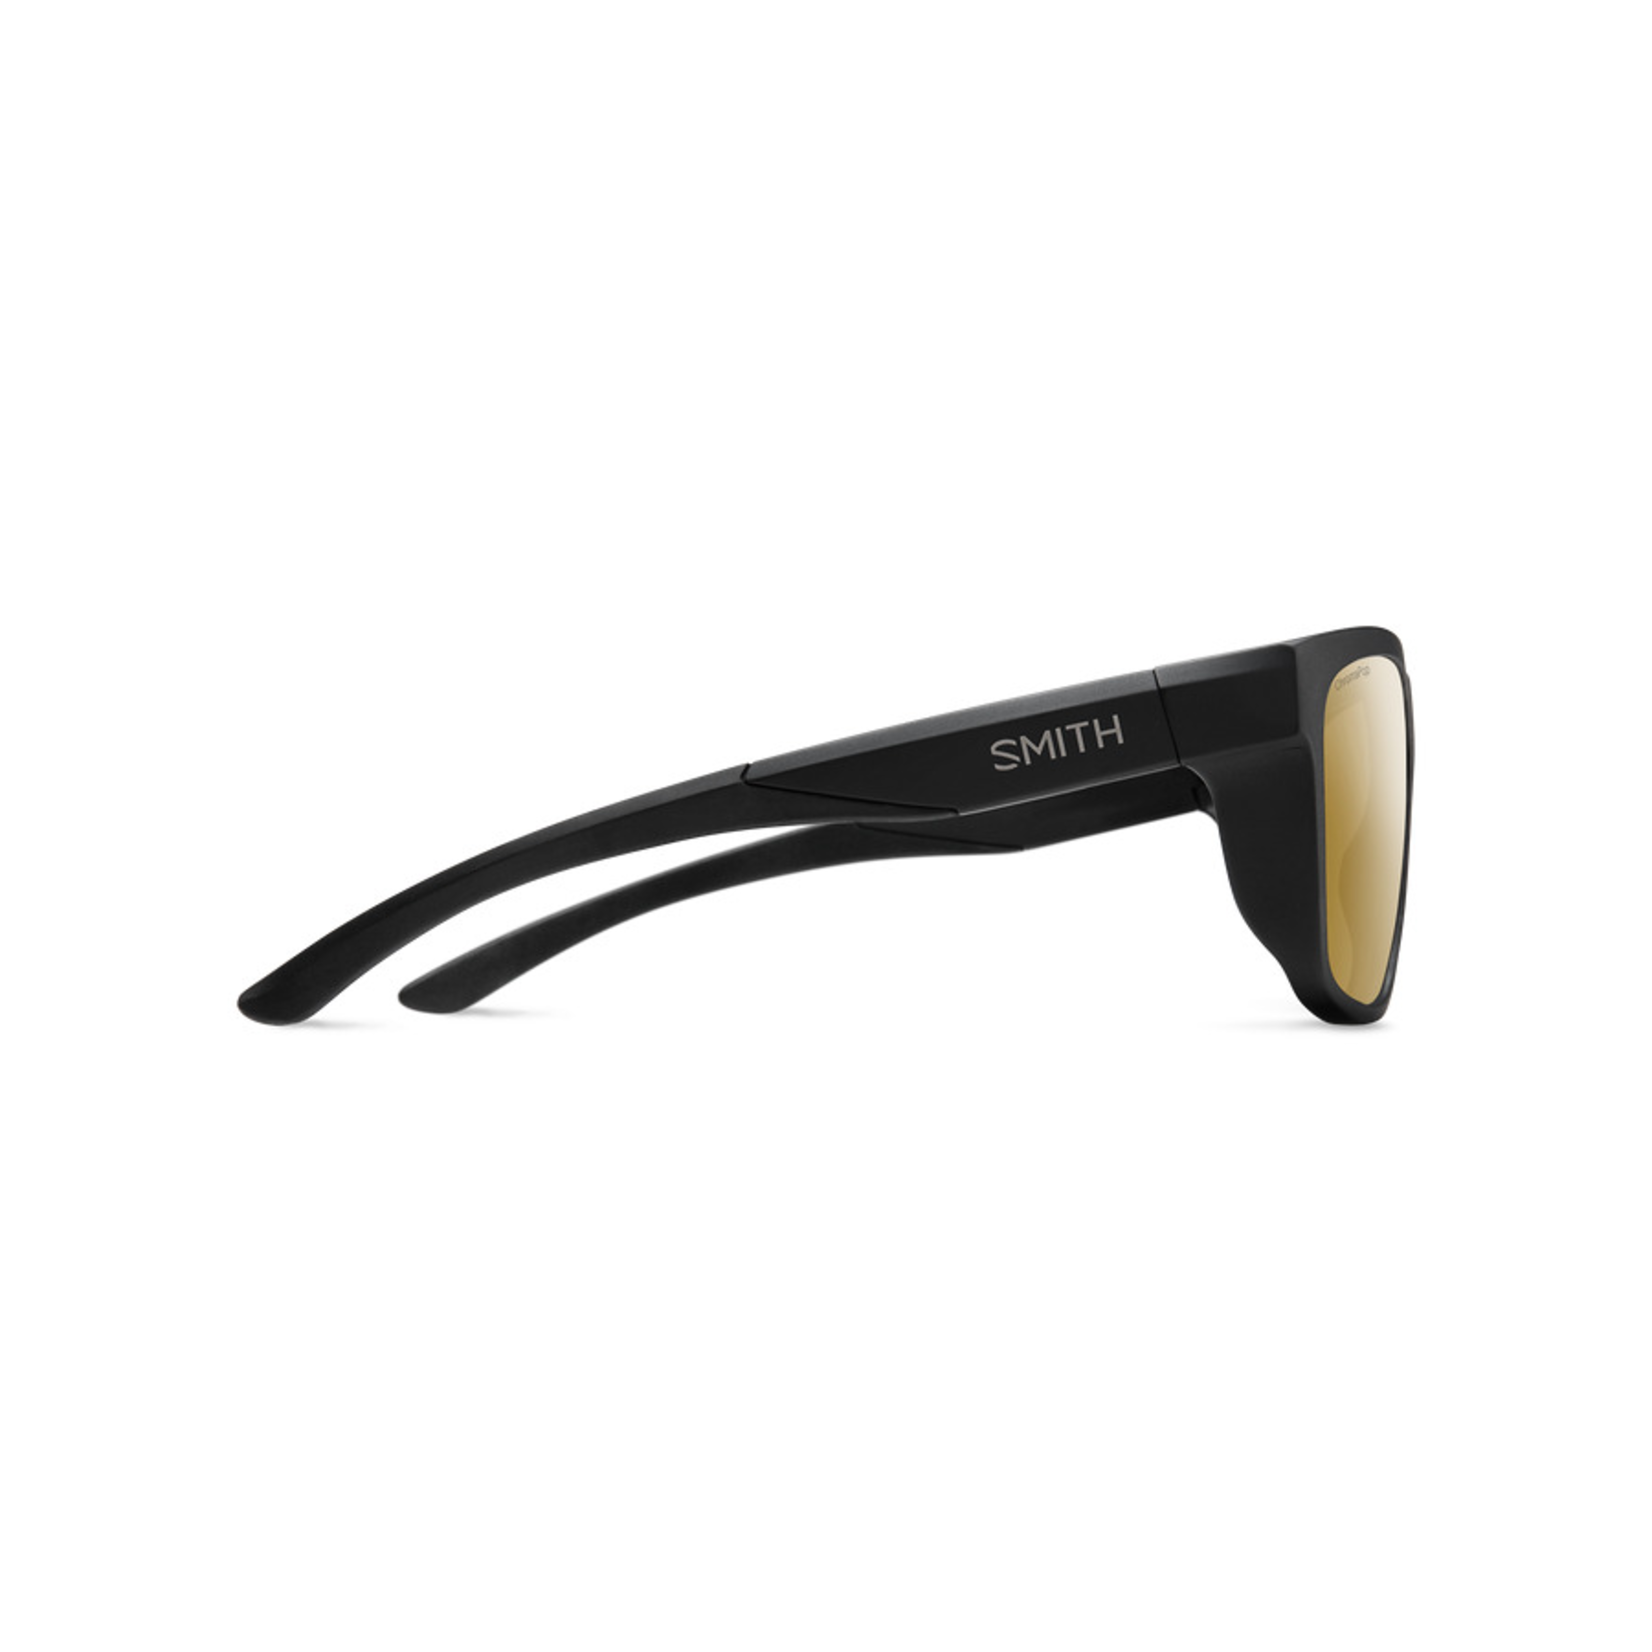 Smith Optics Smith Barra Sunglasses Matte Black + ChromaPop Polarized Bronze Mirror Lens